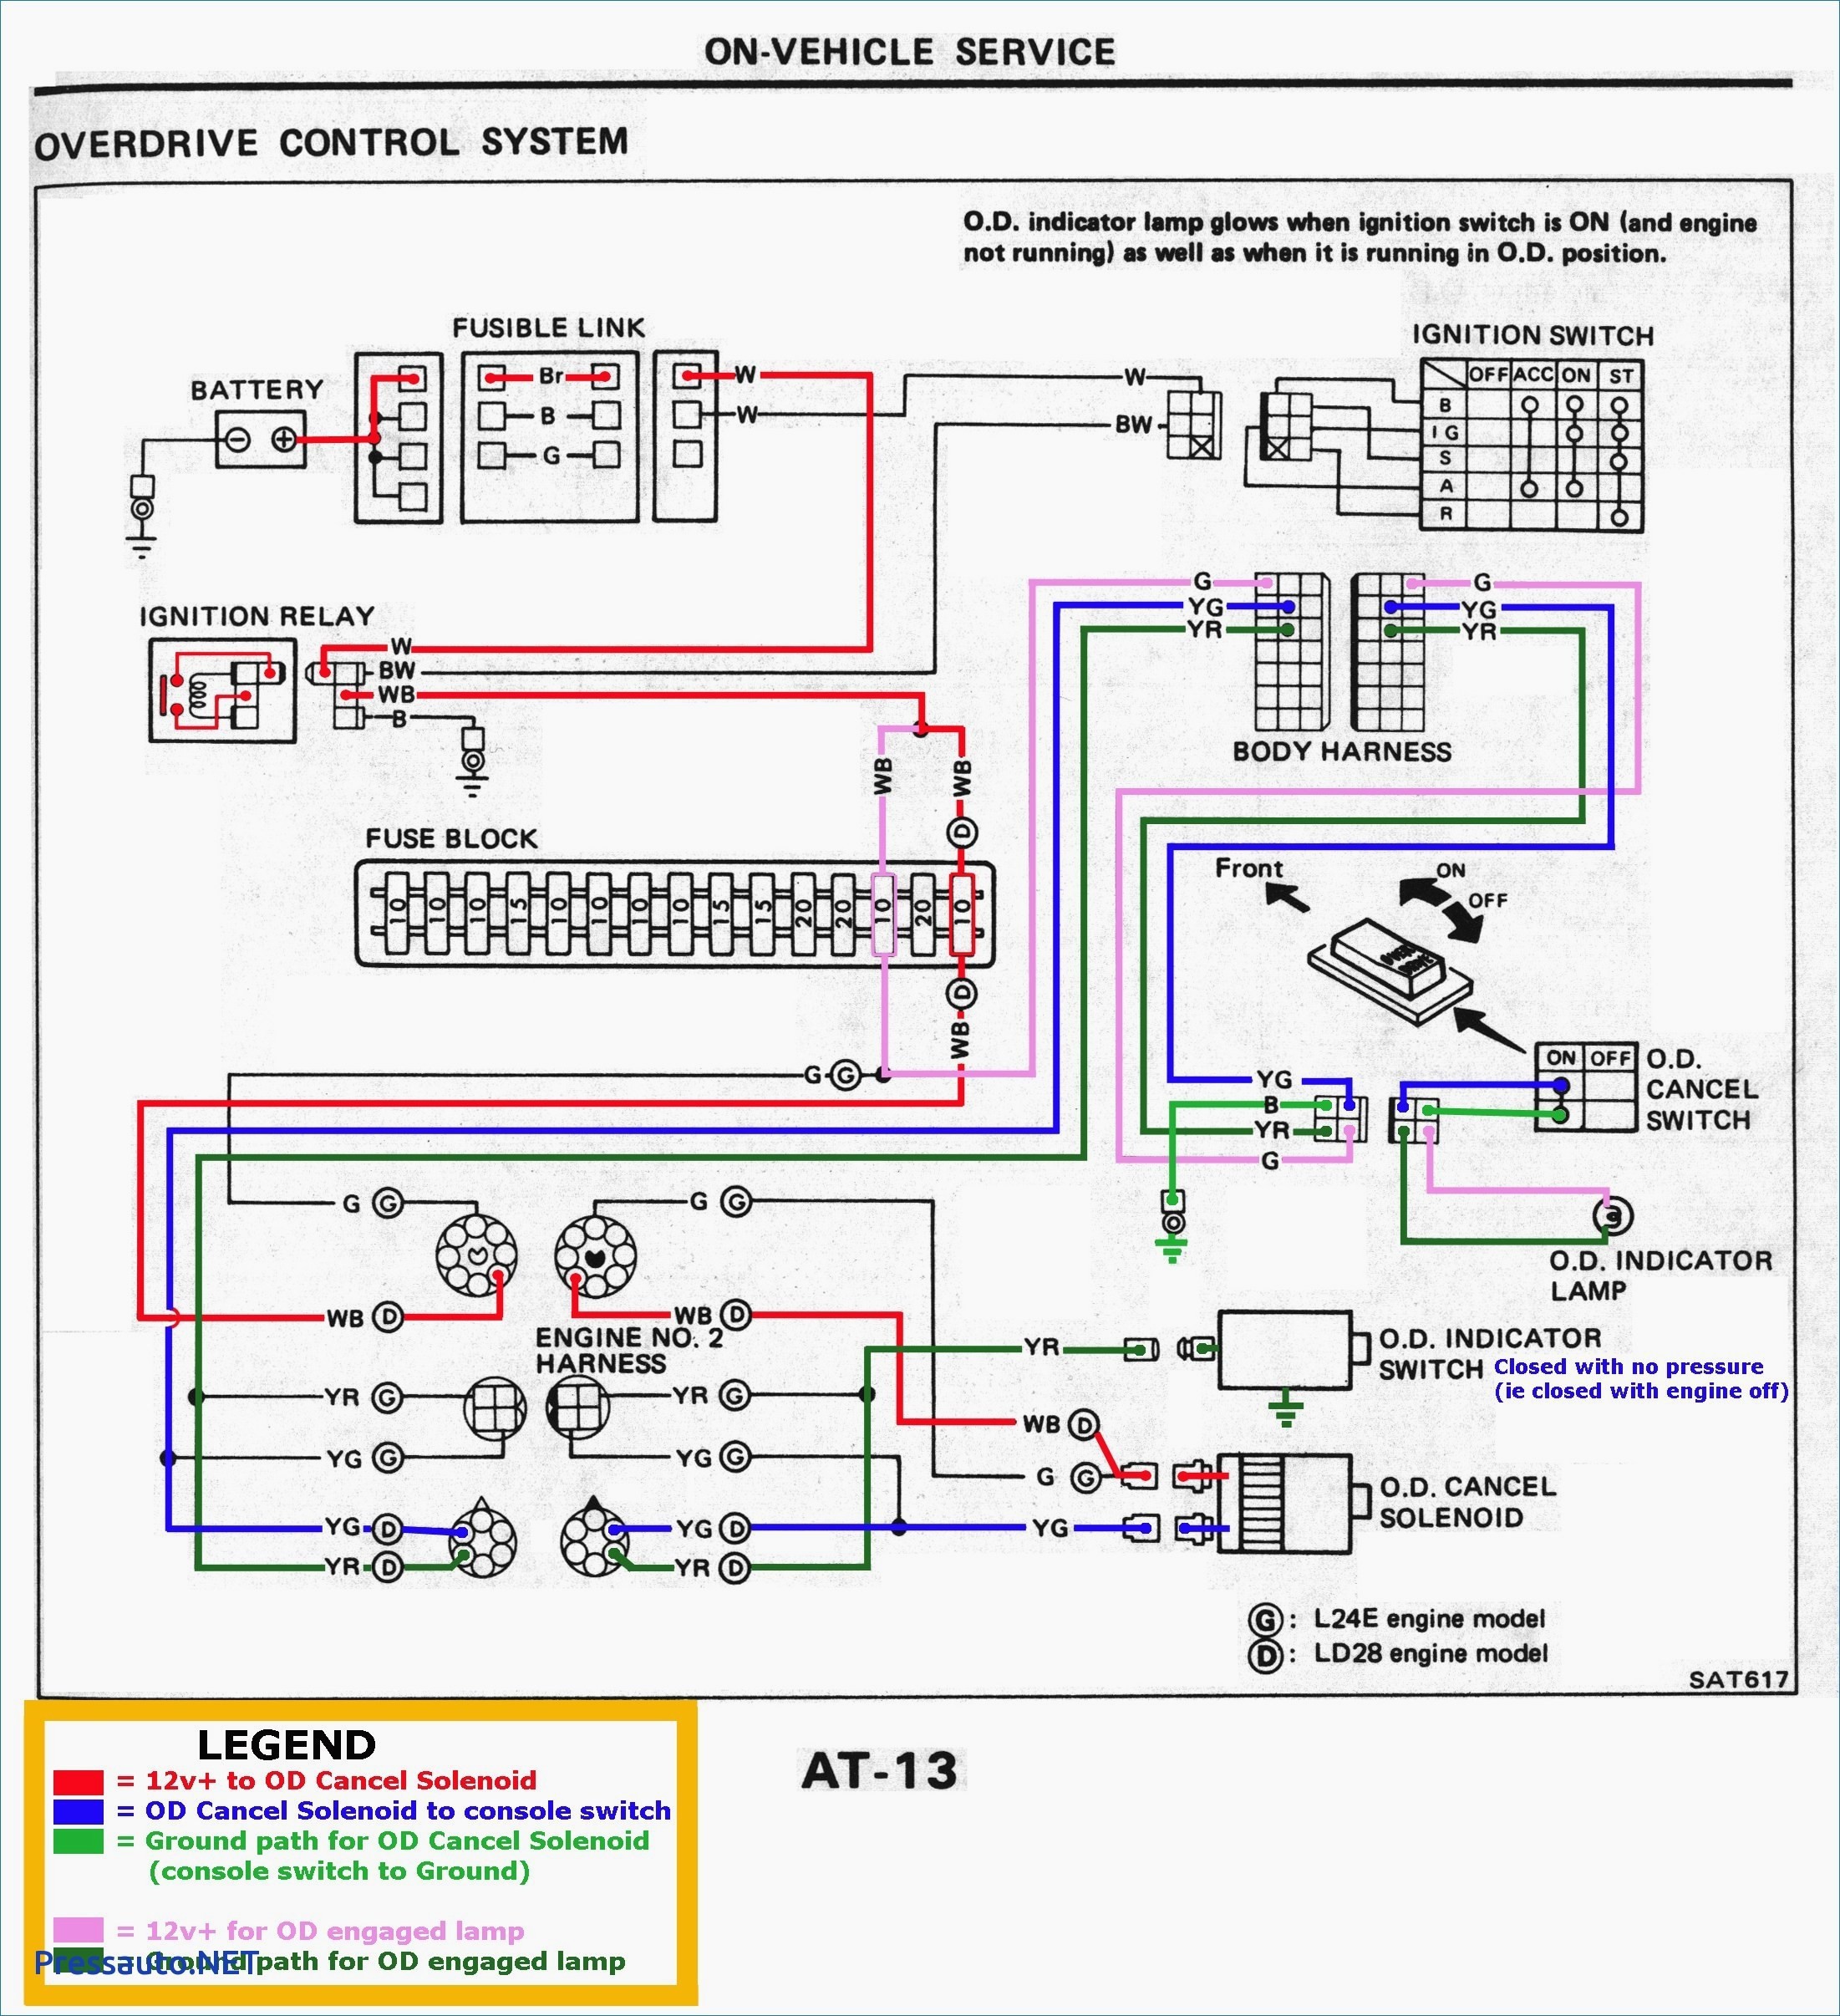 Automotive Wiring Diagram Line Fresh Free Vehicle Wiring Diagrams Free Automotive Wiring Diagrams Download